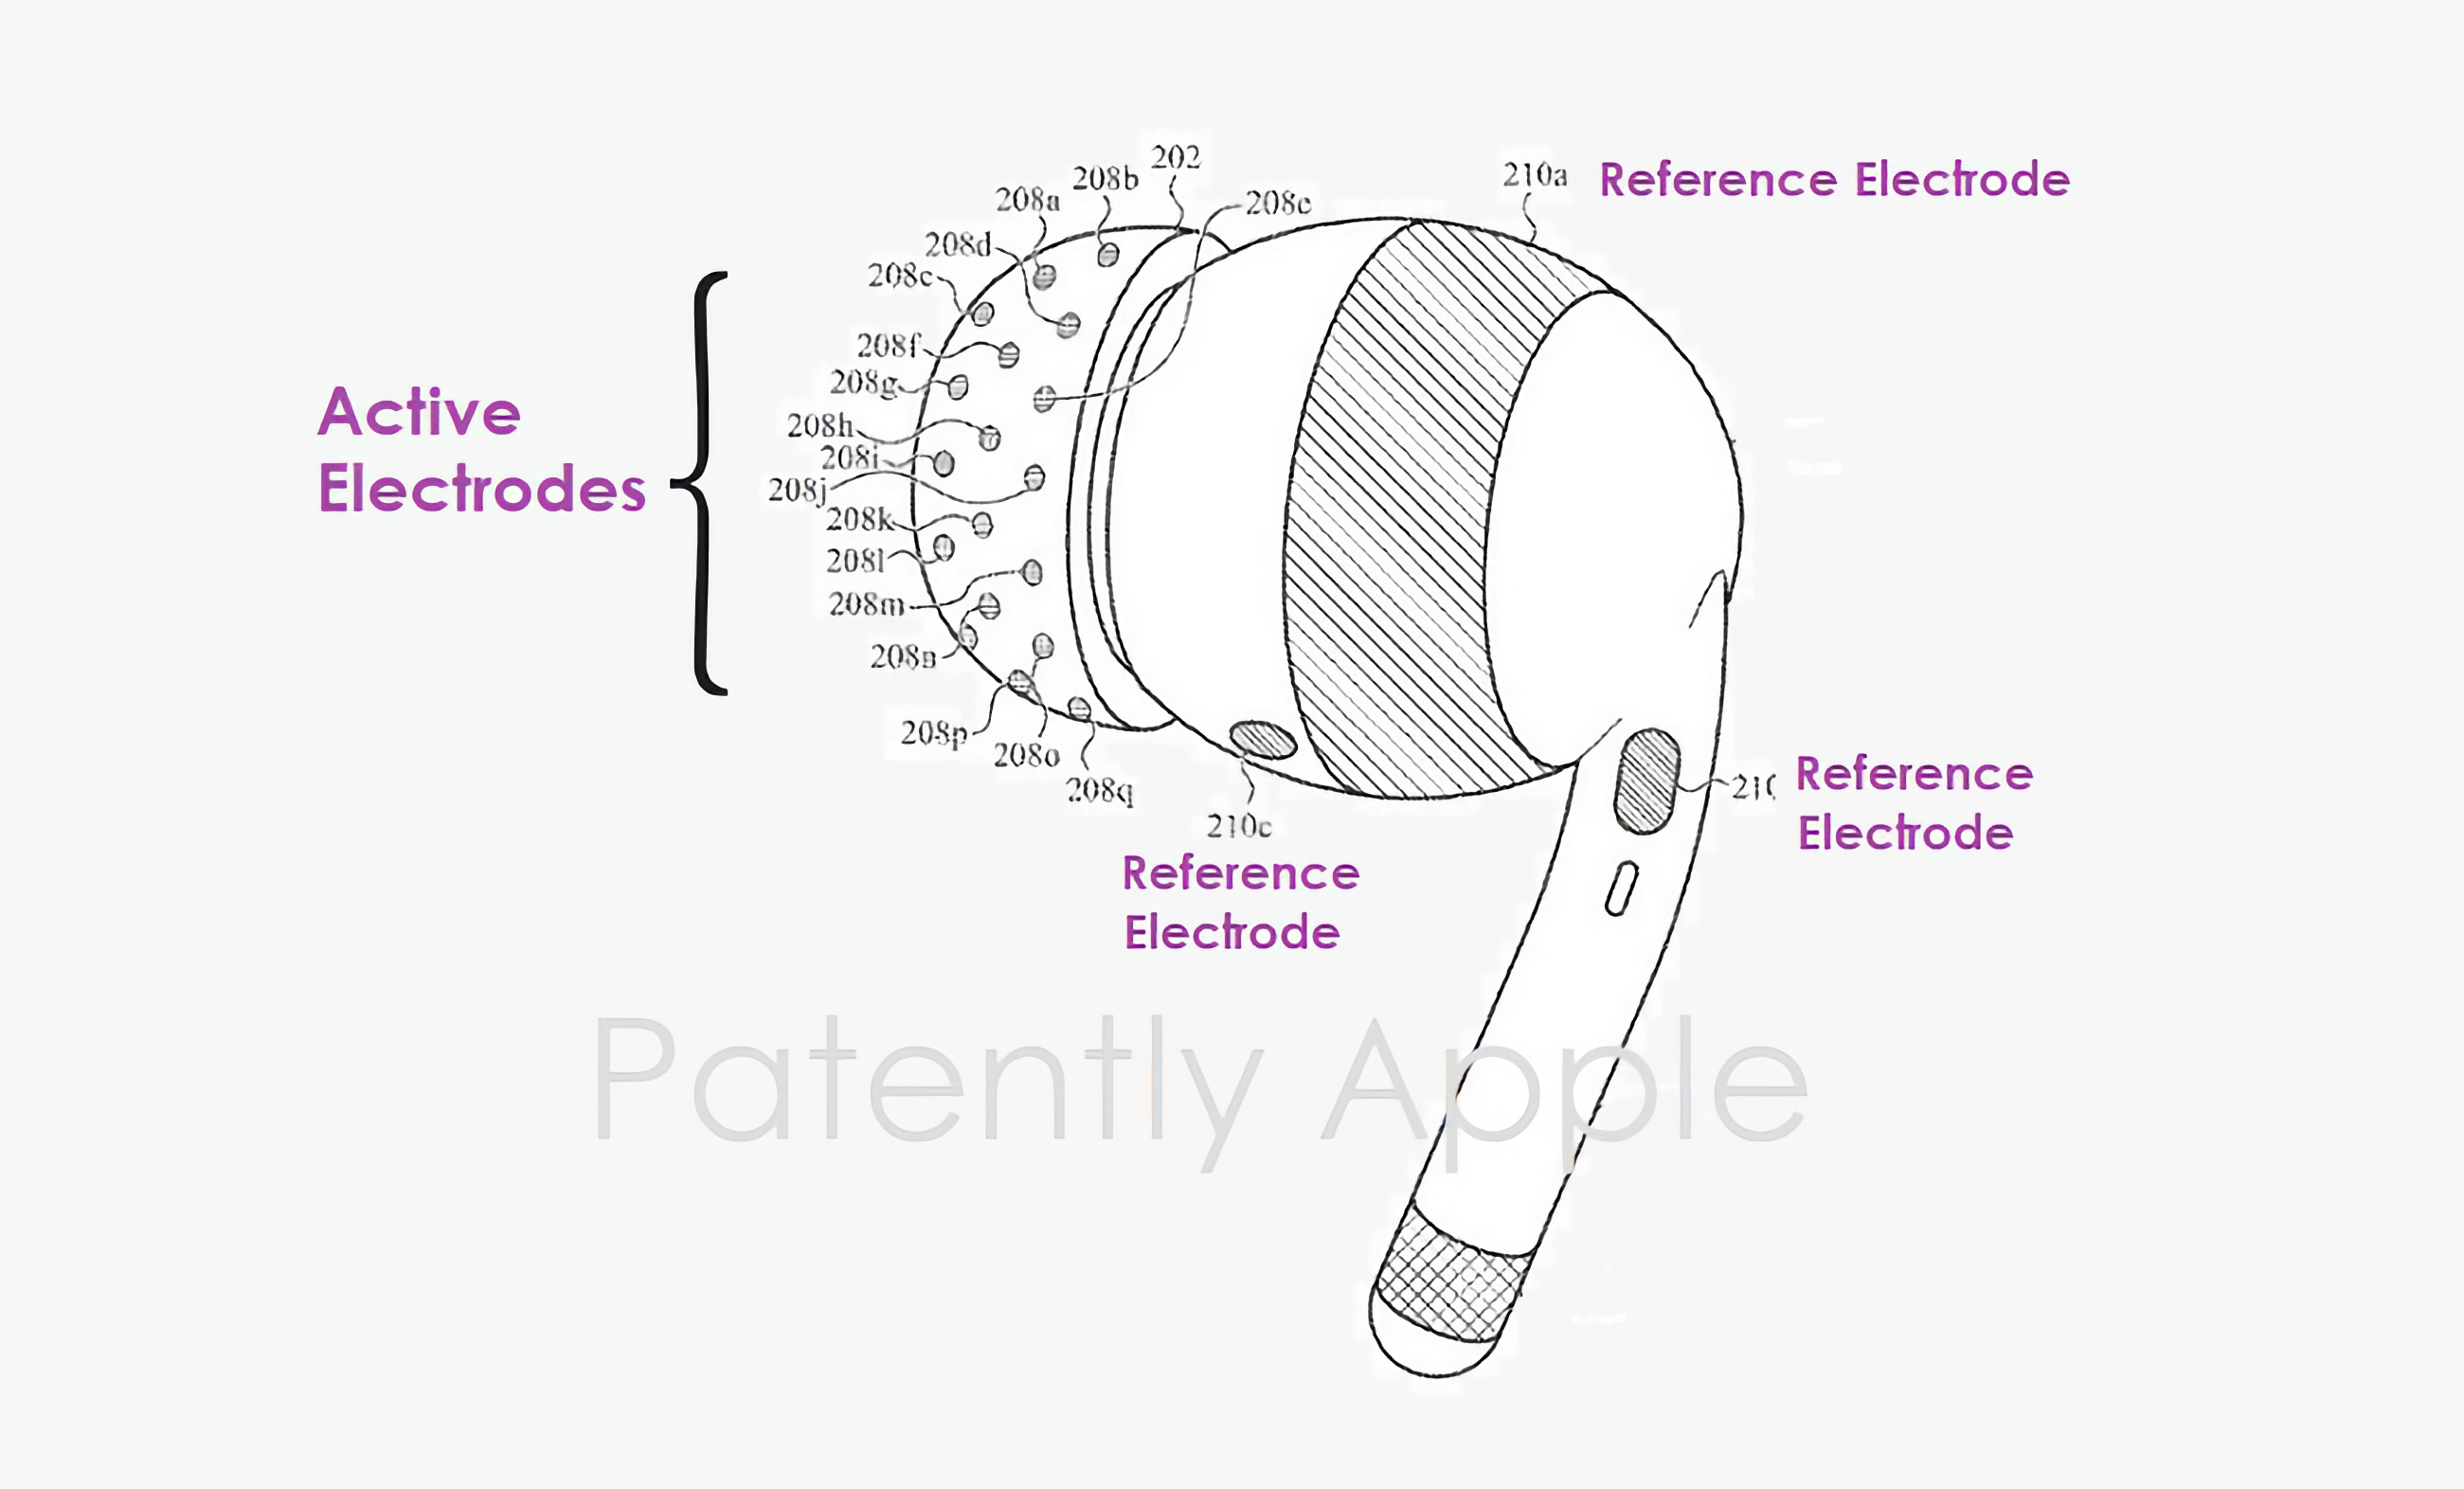 Патент Apple на измерение биосигналов и активности мозга пользователя AirPods (© Patently Apple)